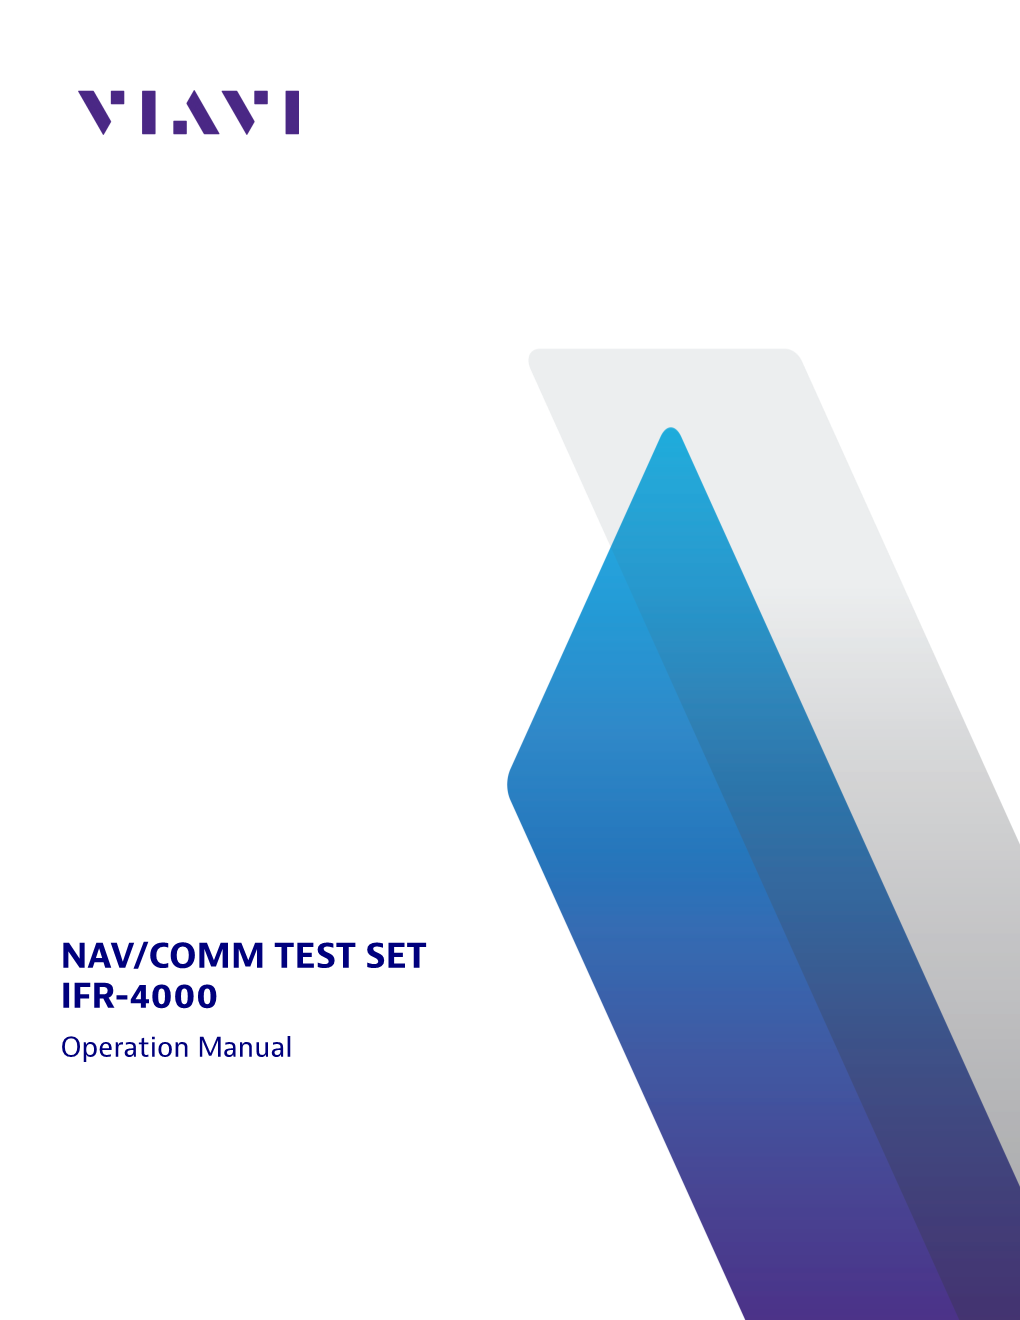 NAV/COMM TEST SET, IFR-4000, Operation Manual